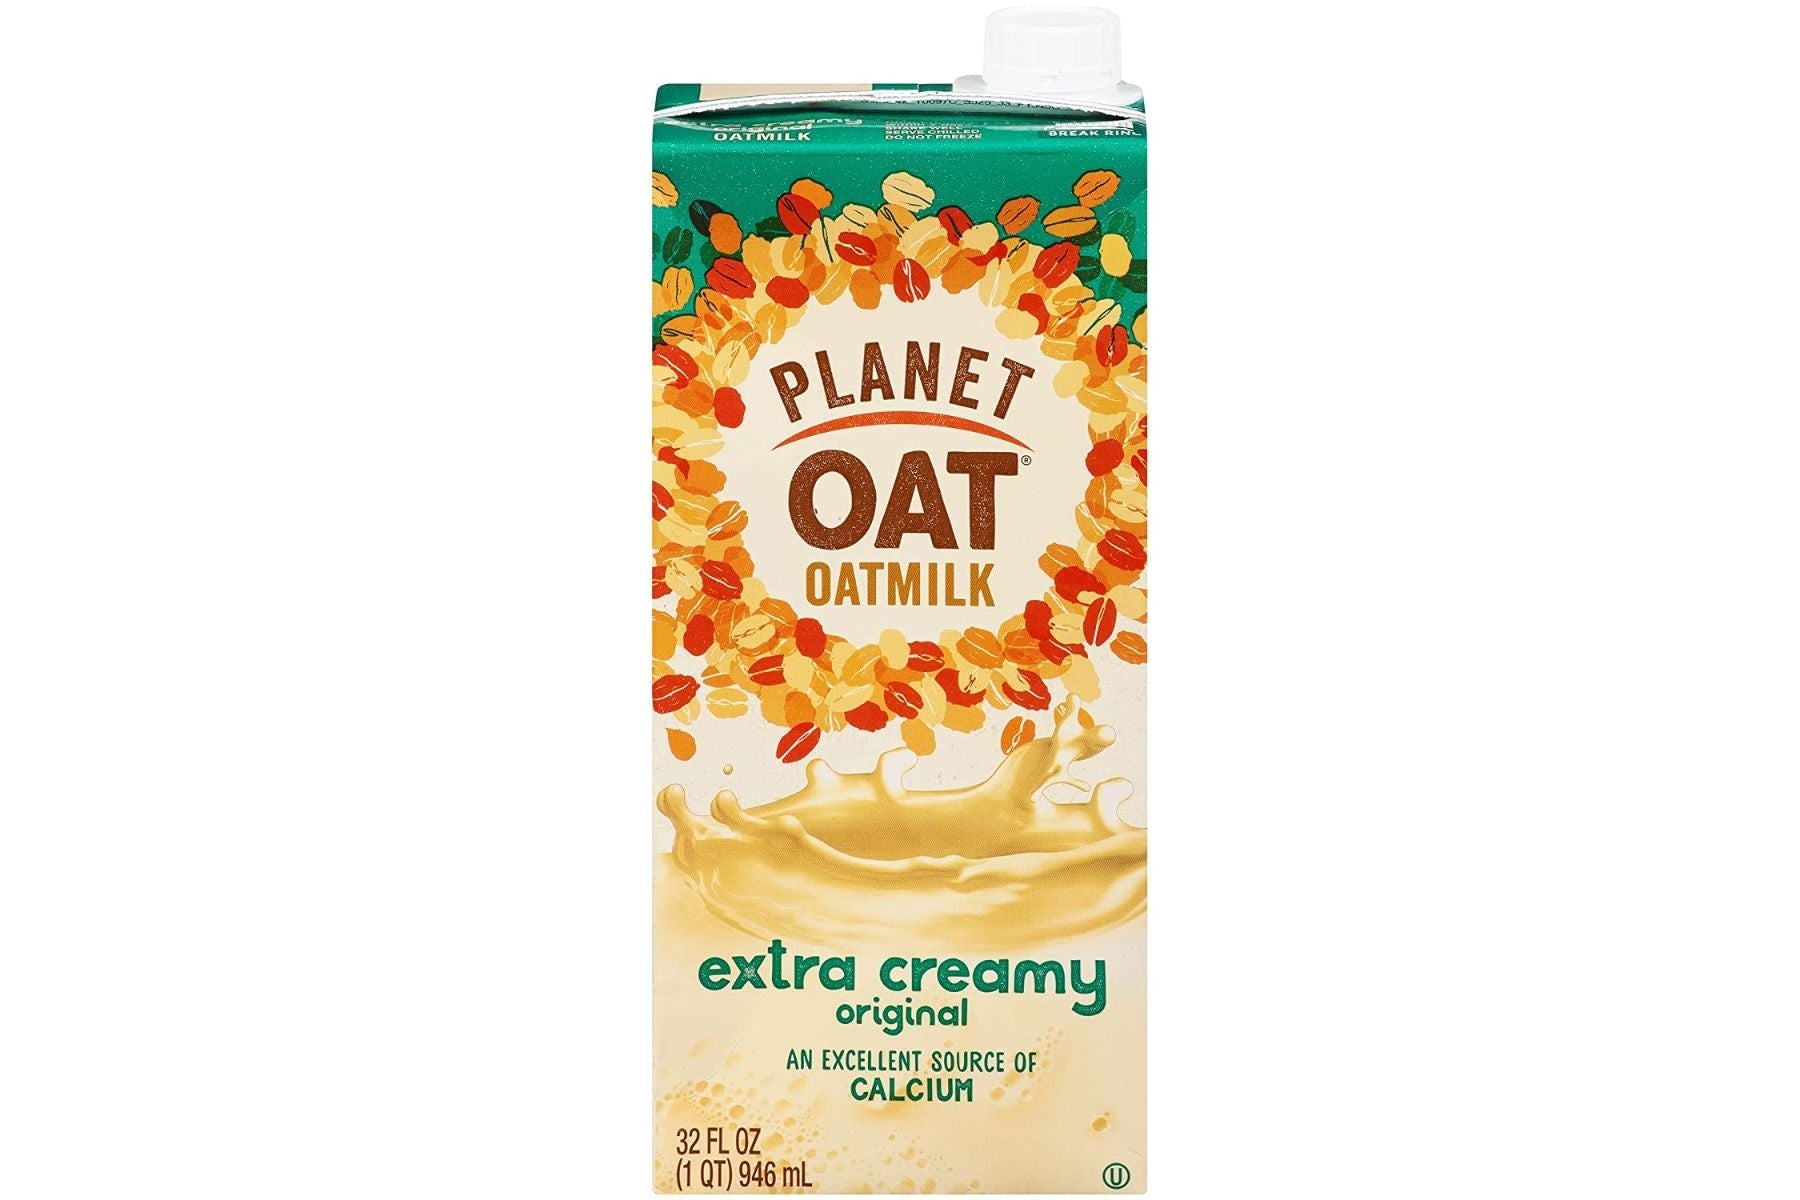 Planet Oat Extra Creamy Oatmilk (1 CS. of 6)